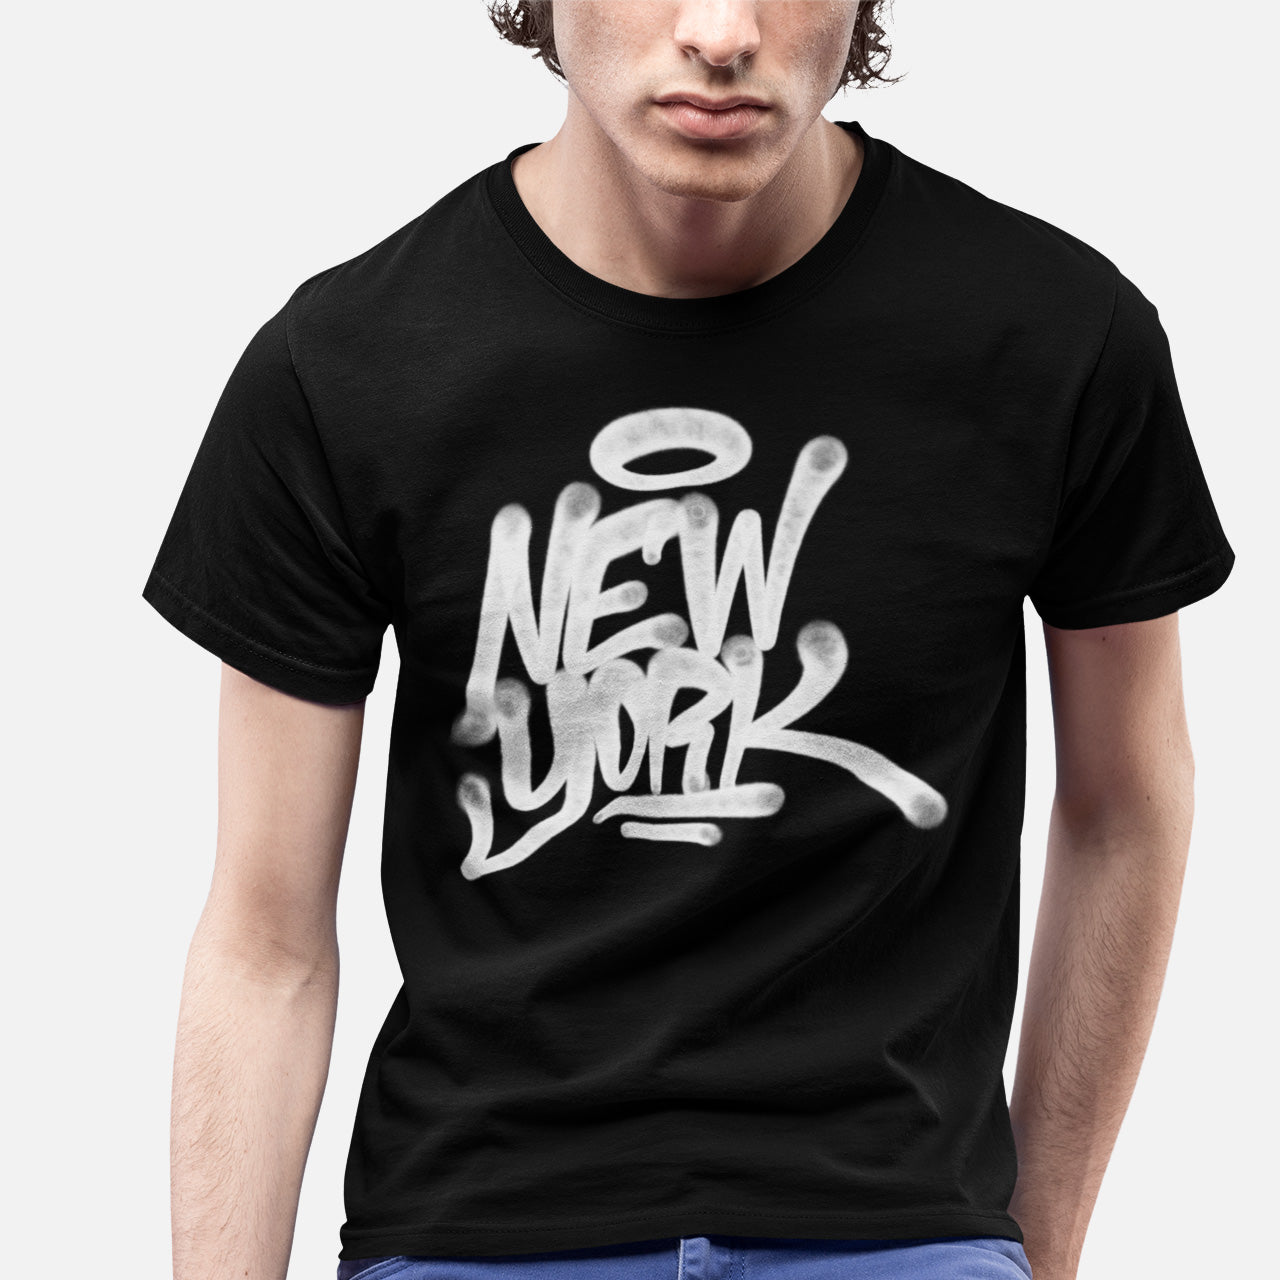 New York Handstyle T-shirt